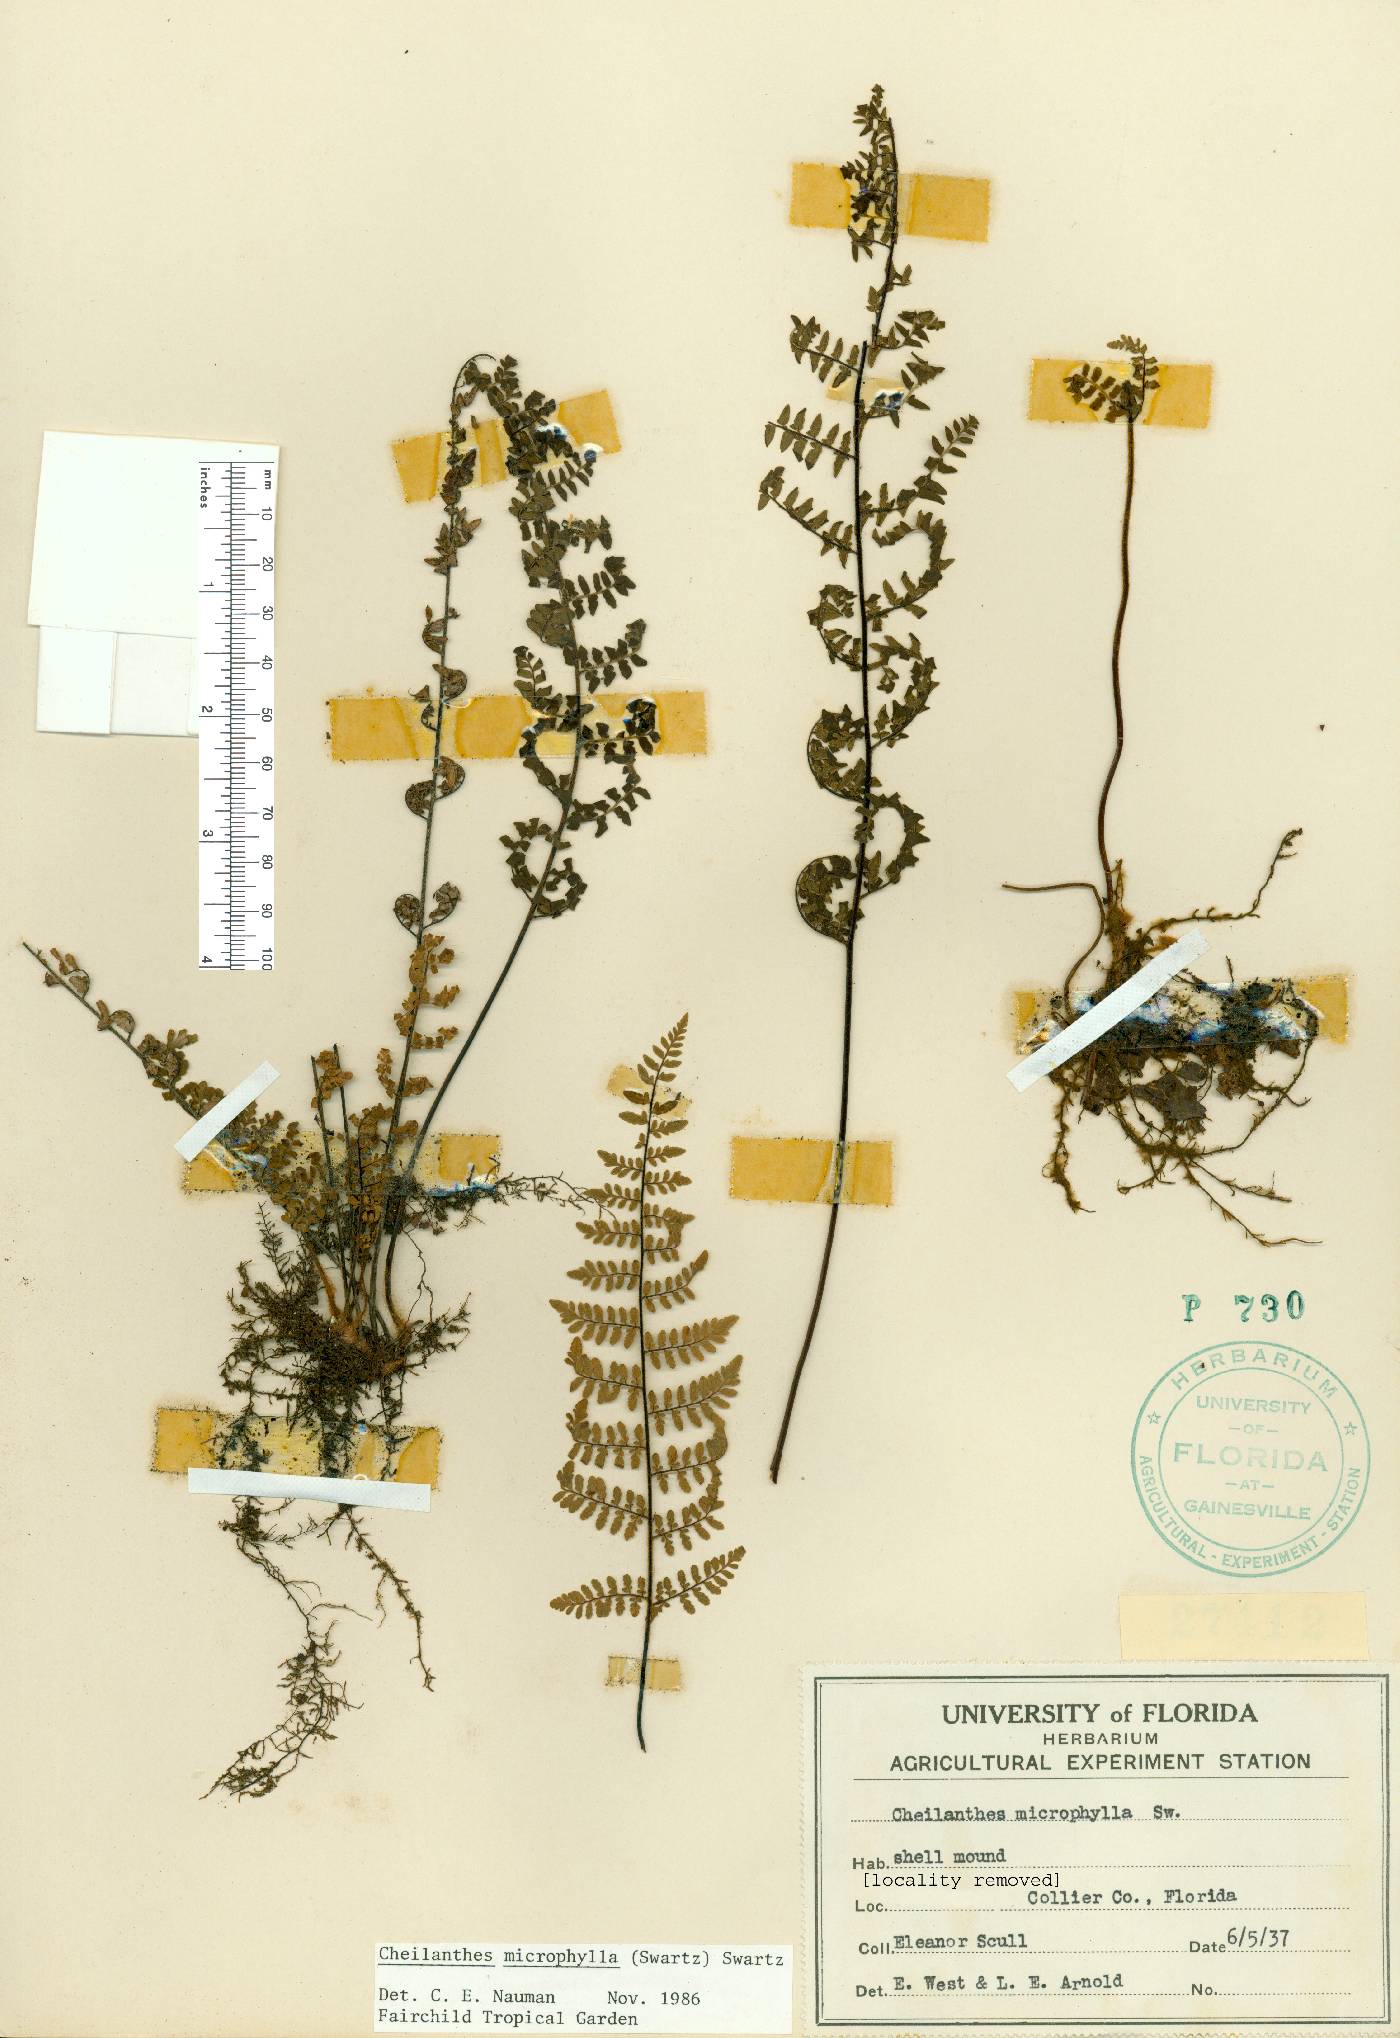 Myriopteris microphylla image